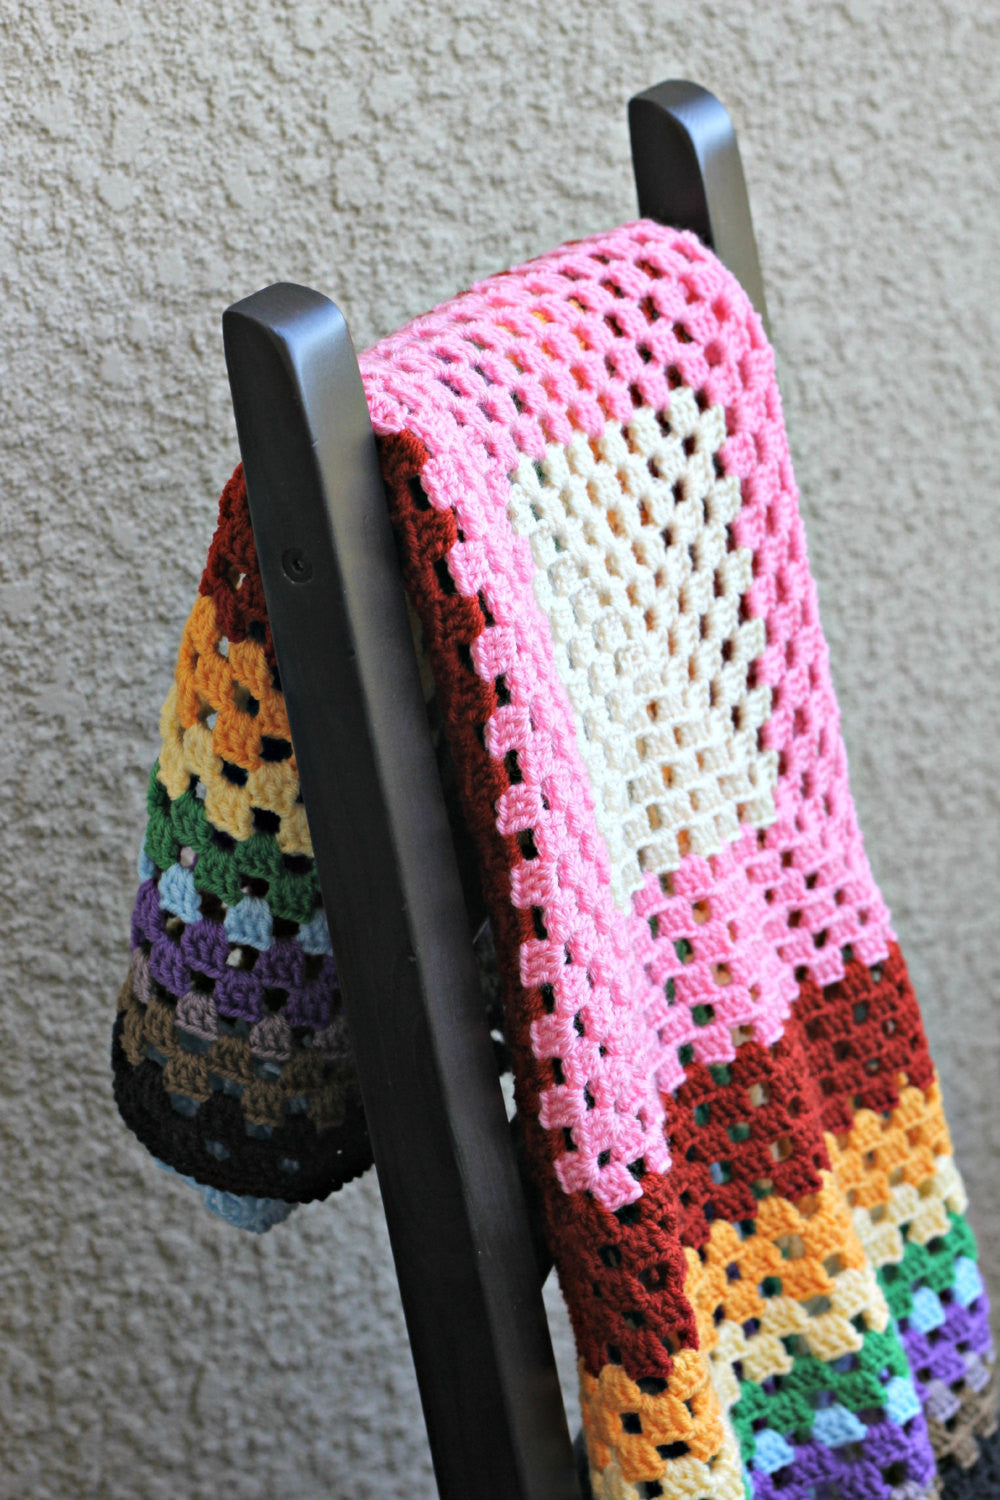 Crochet baby blanket with tassels in rainbow colors, newborn blanket, baby shower gift - KGThreads